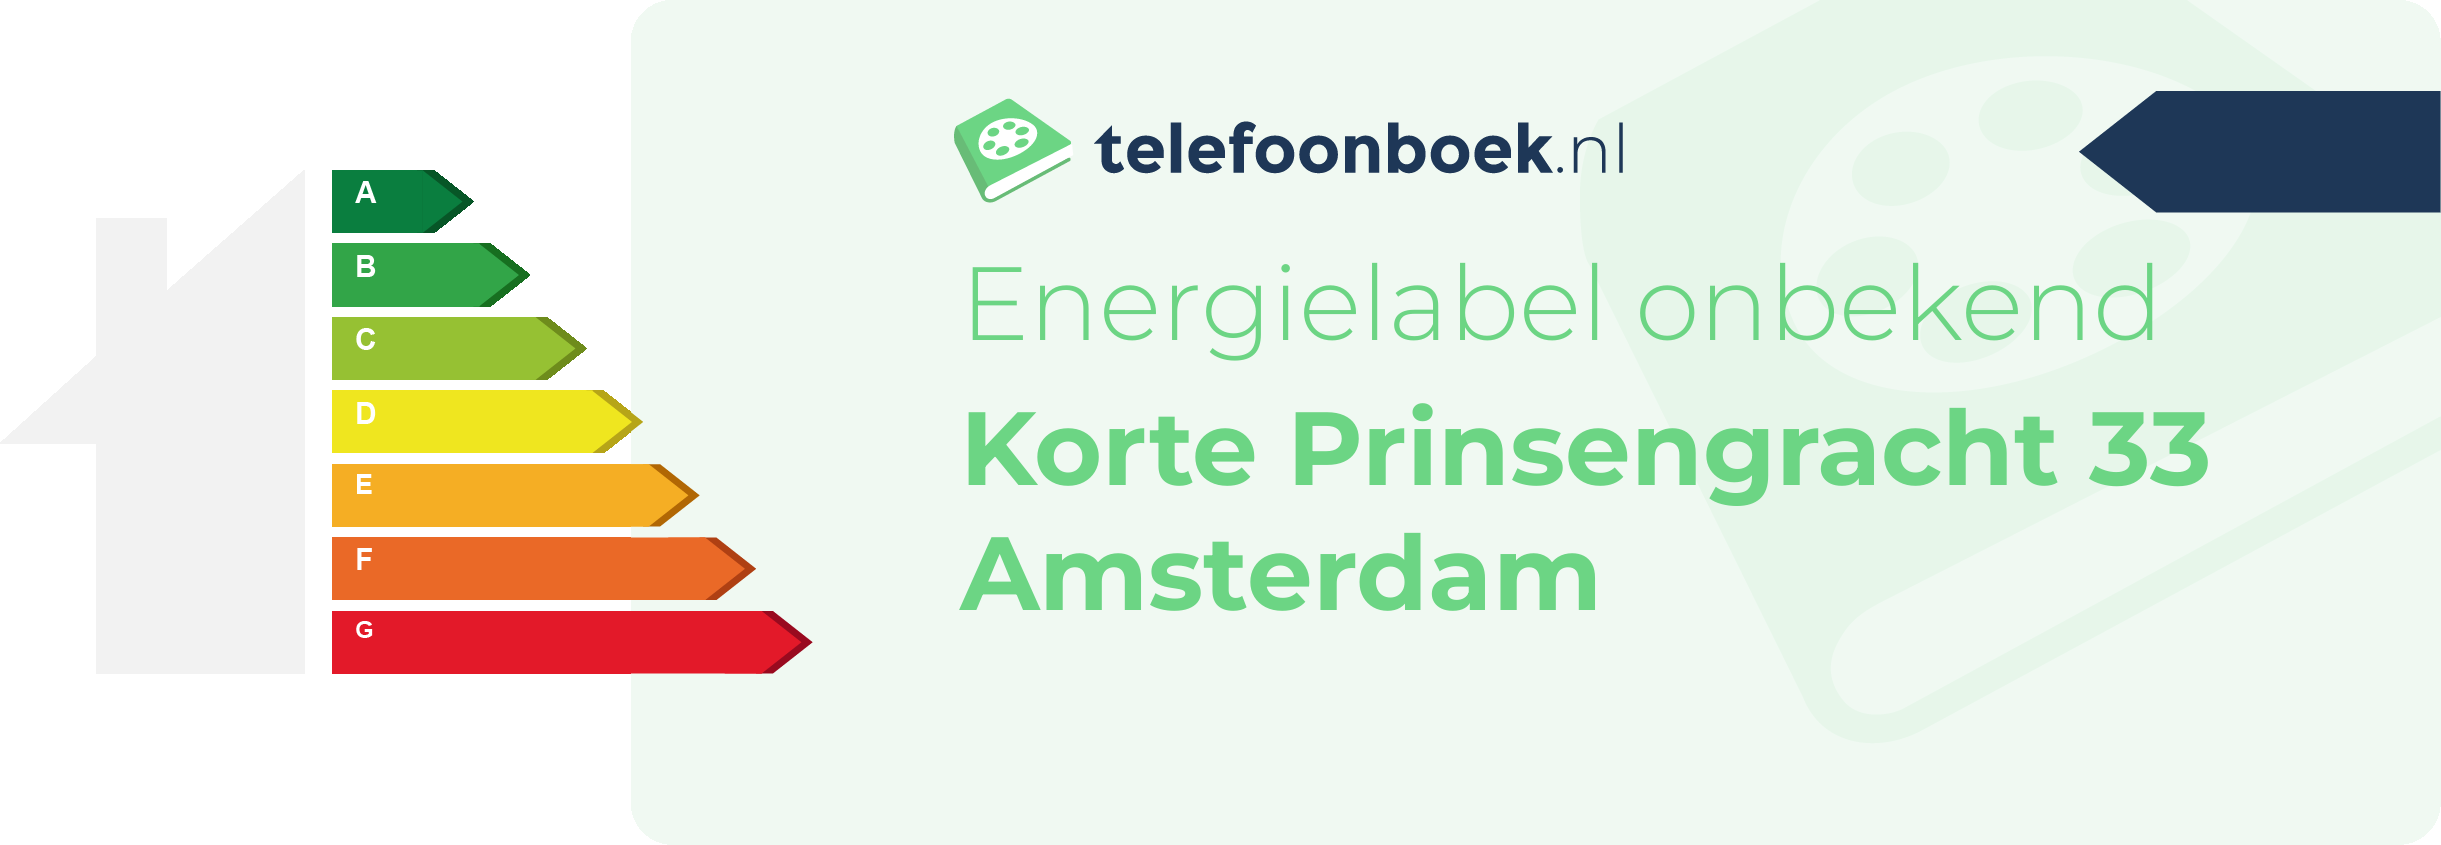 Energielabel Korte Prinsengracht 33 Amsterdam